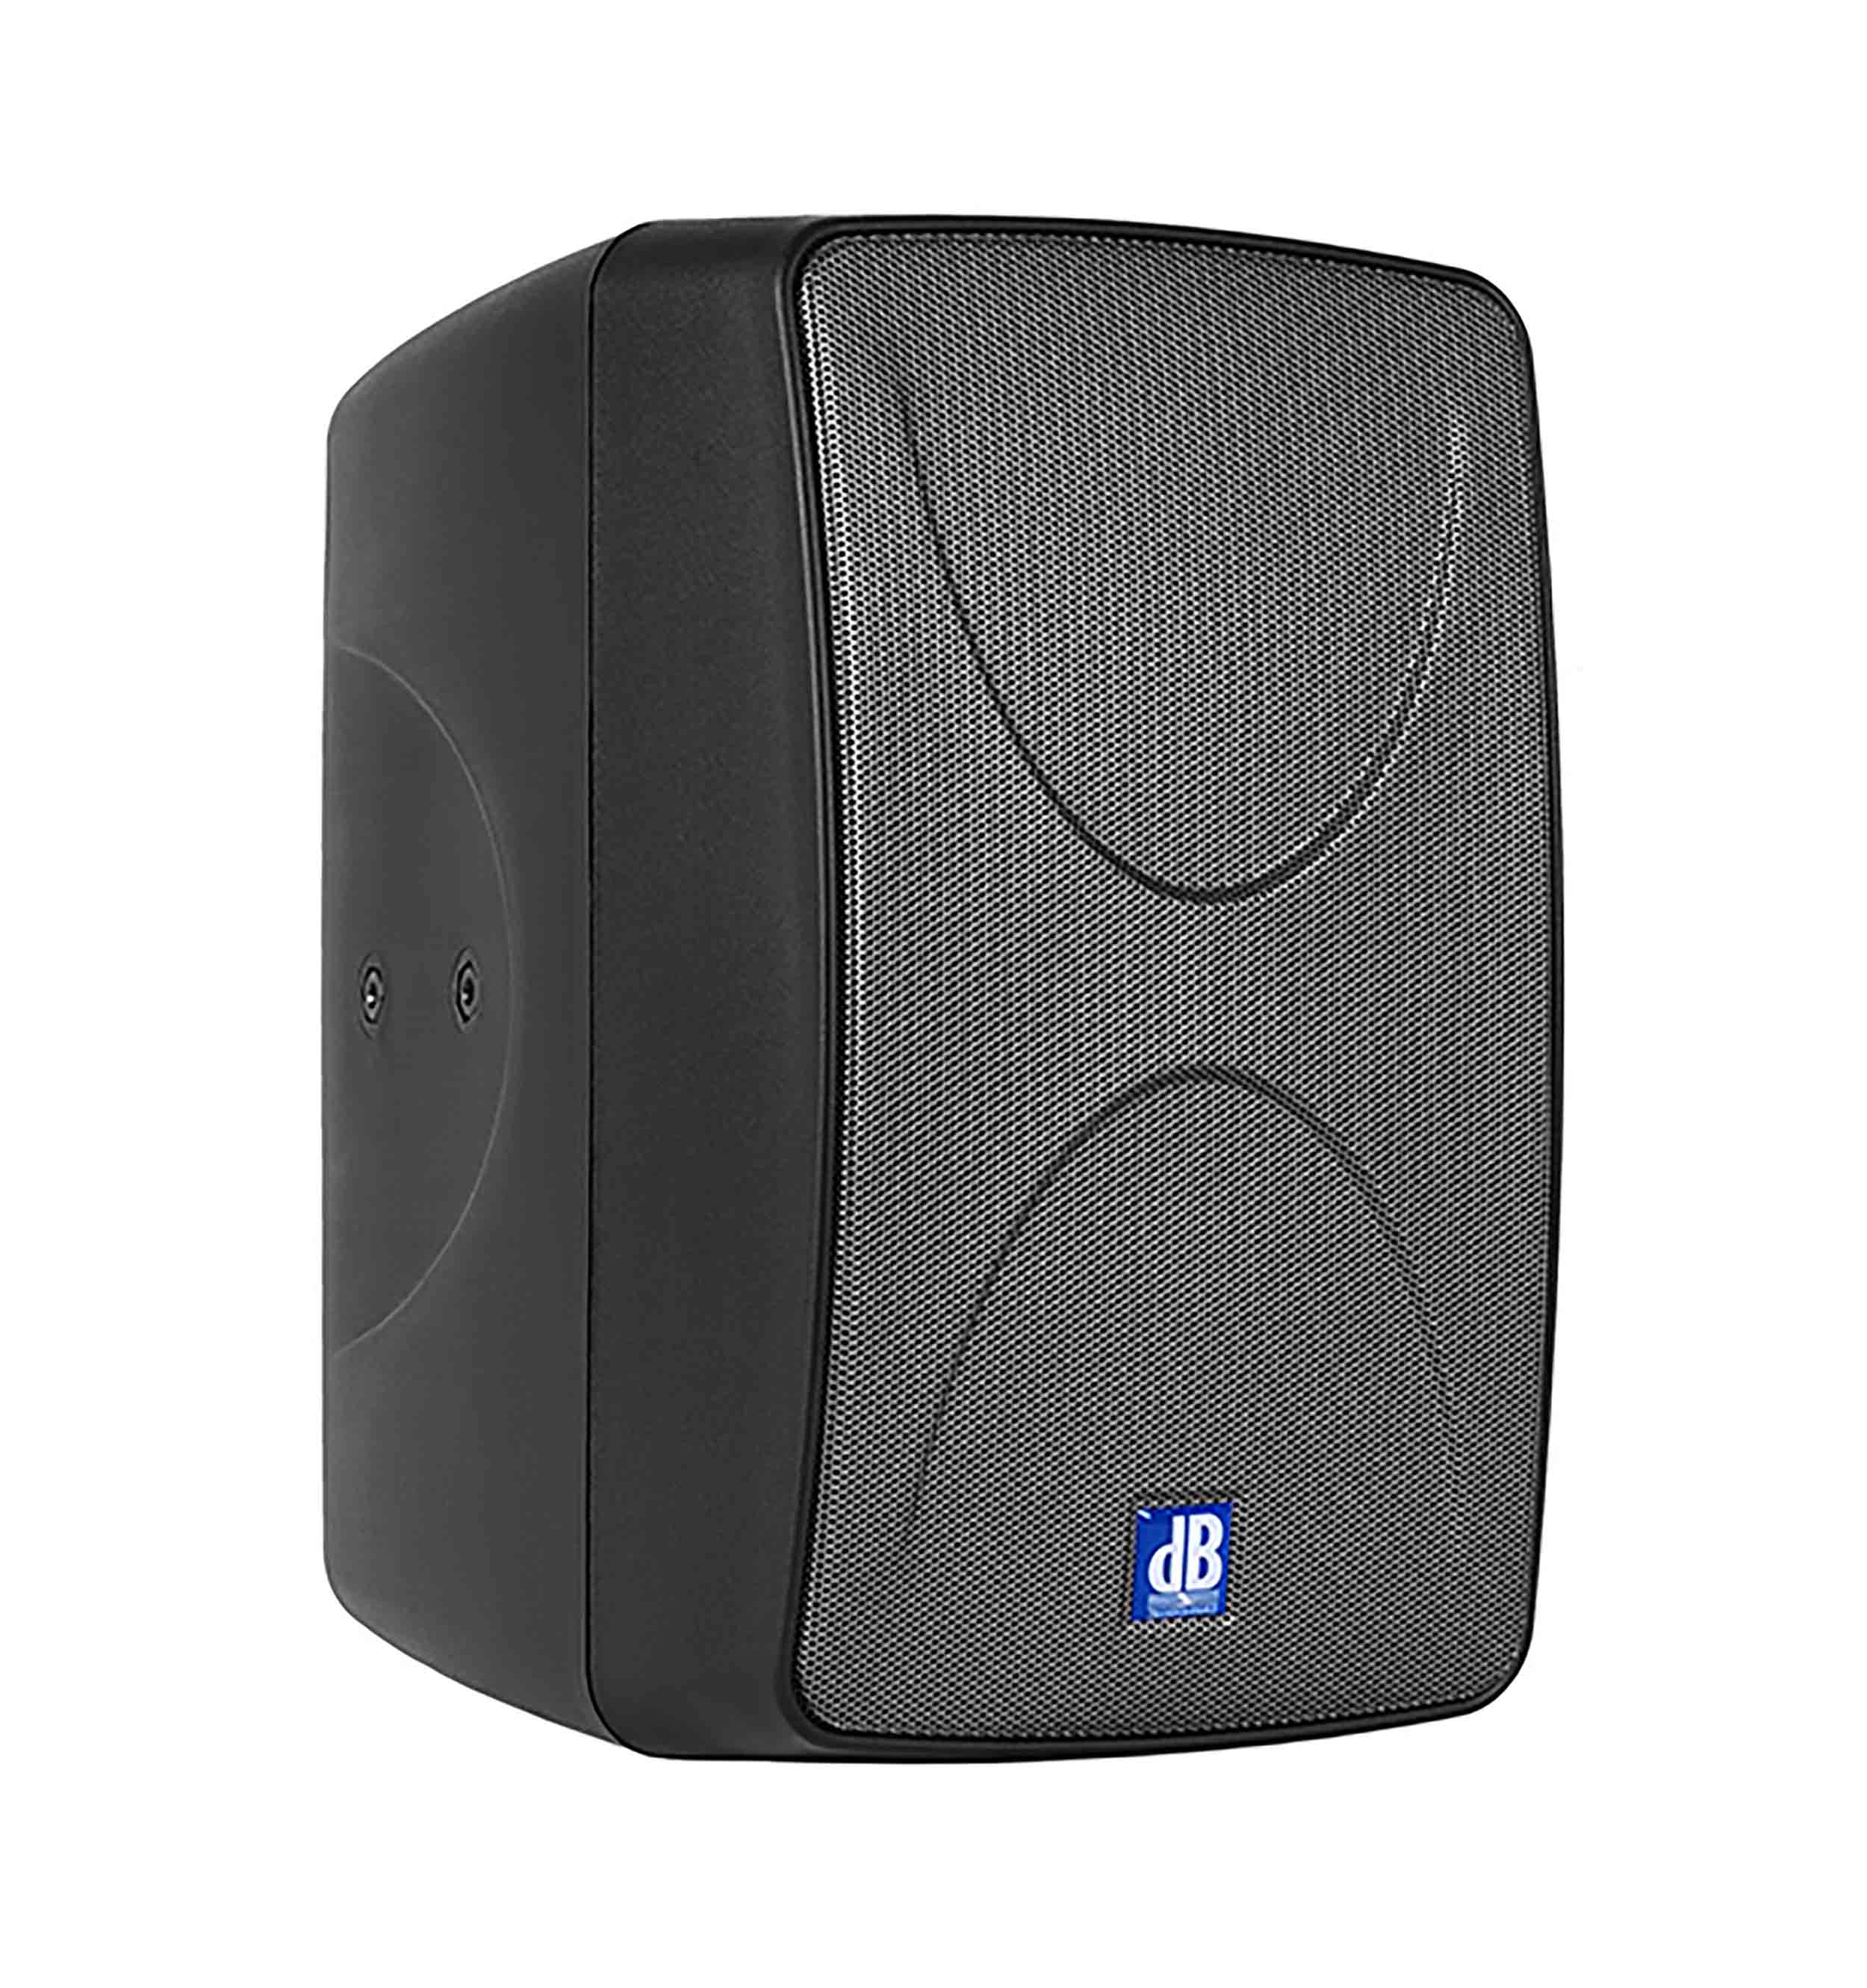 dB Technologies K 300, 2x6.5" 2-Way Active Speaker - 300W - Hollywood DJ